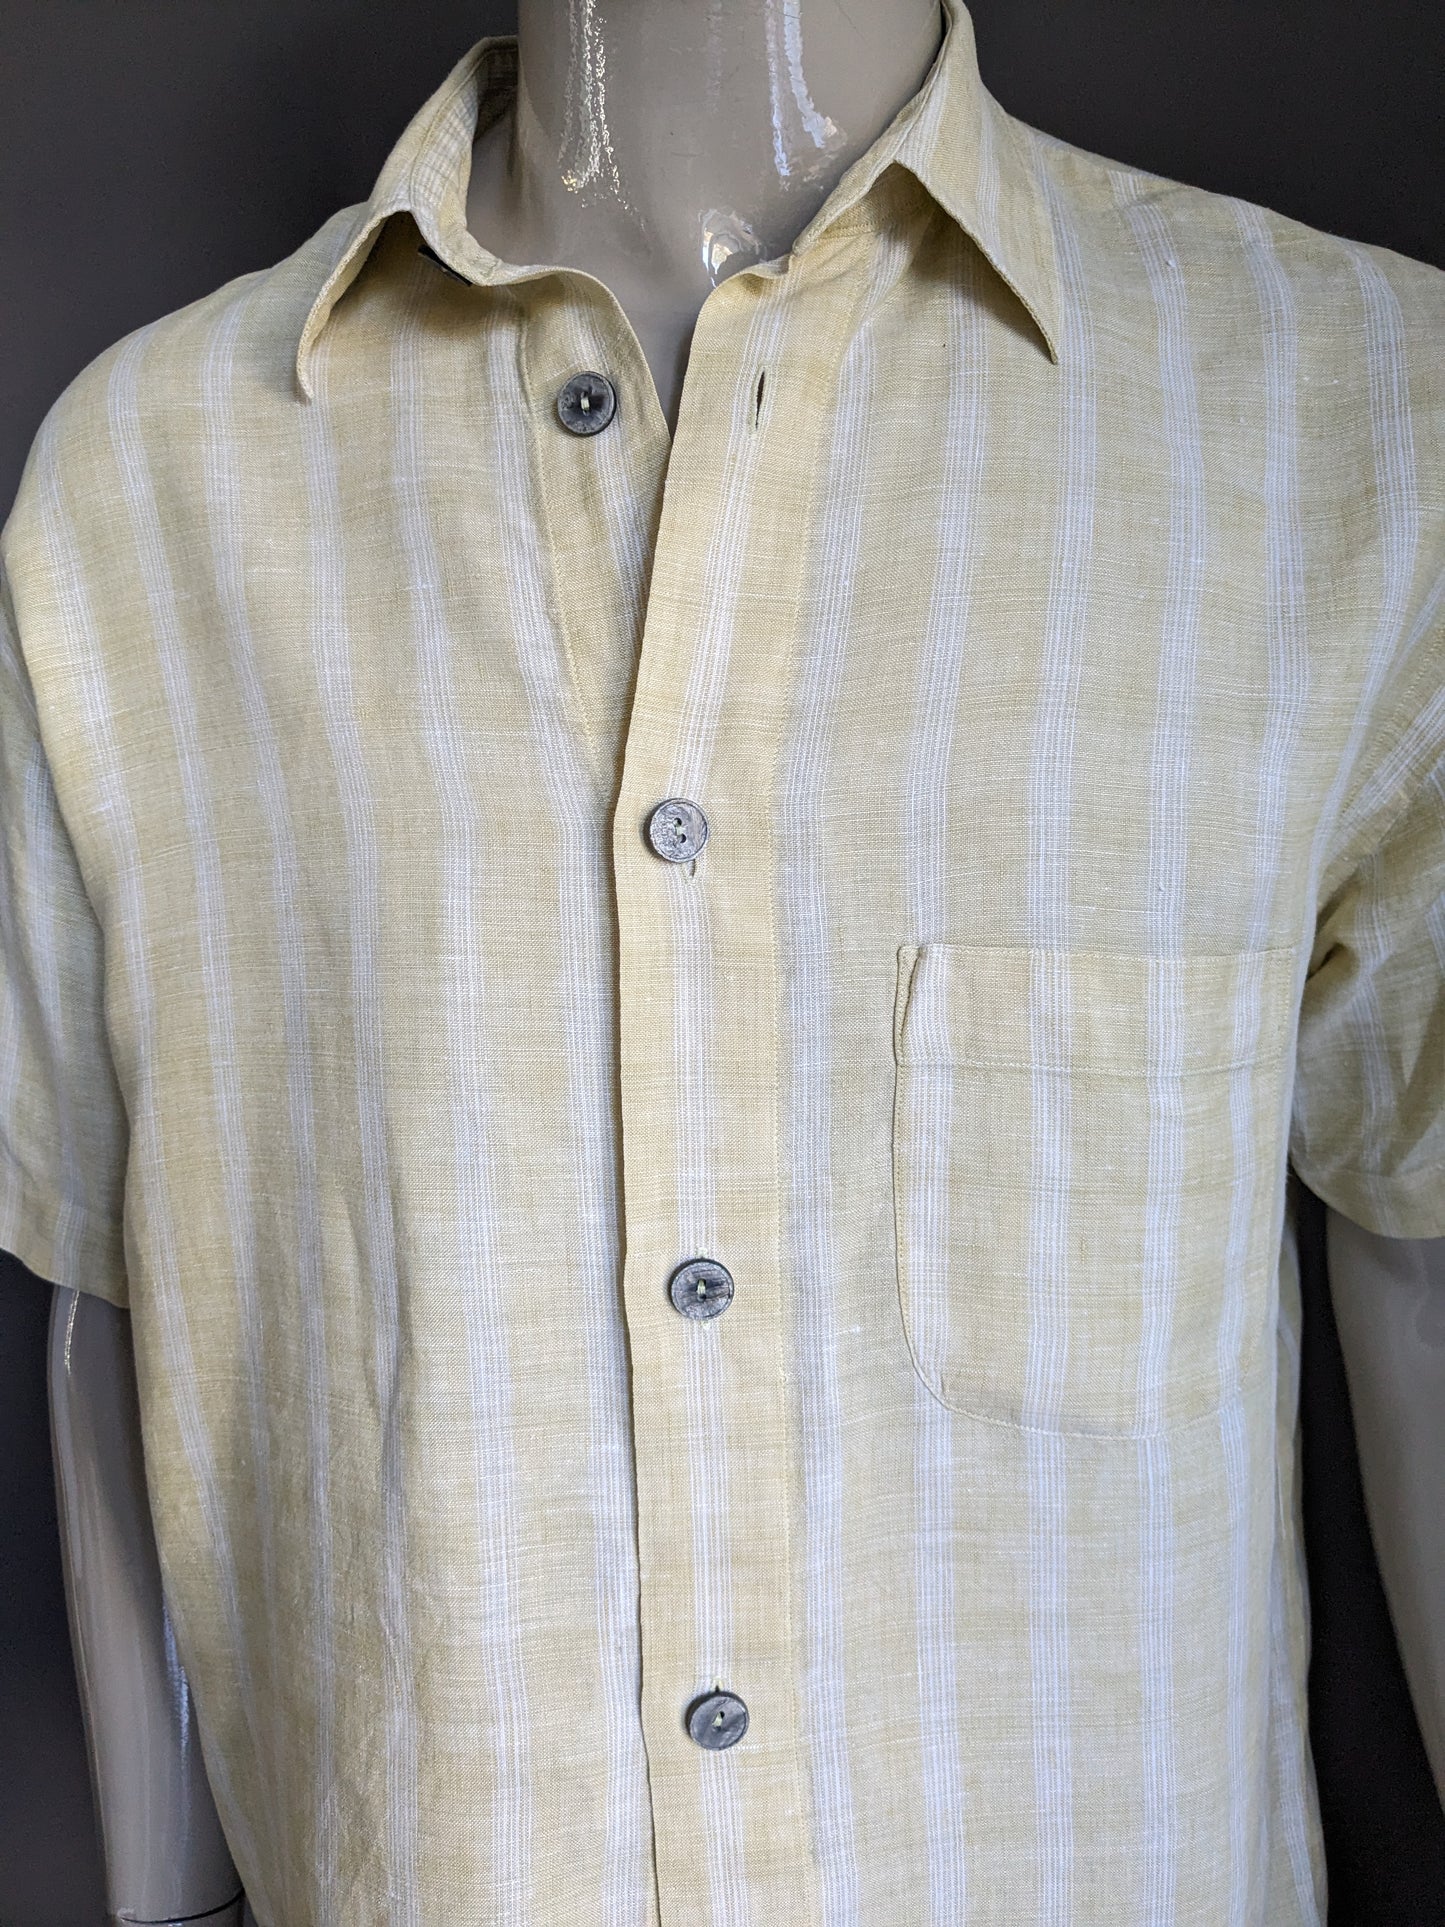 Vintage linen signum shirt short sleeve. Larger buttons. White yellow checkered. Size L / XL.